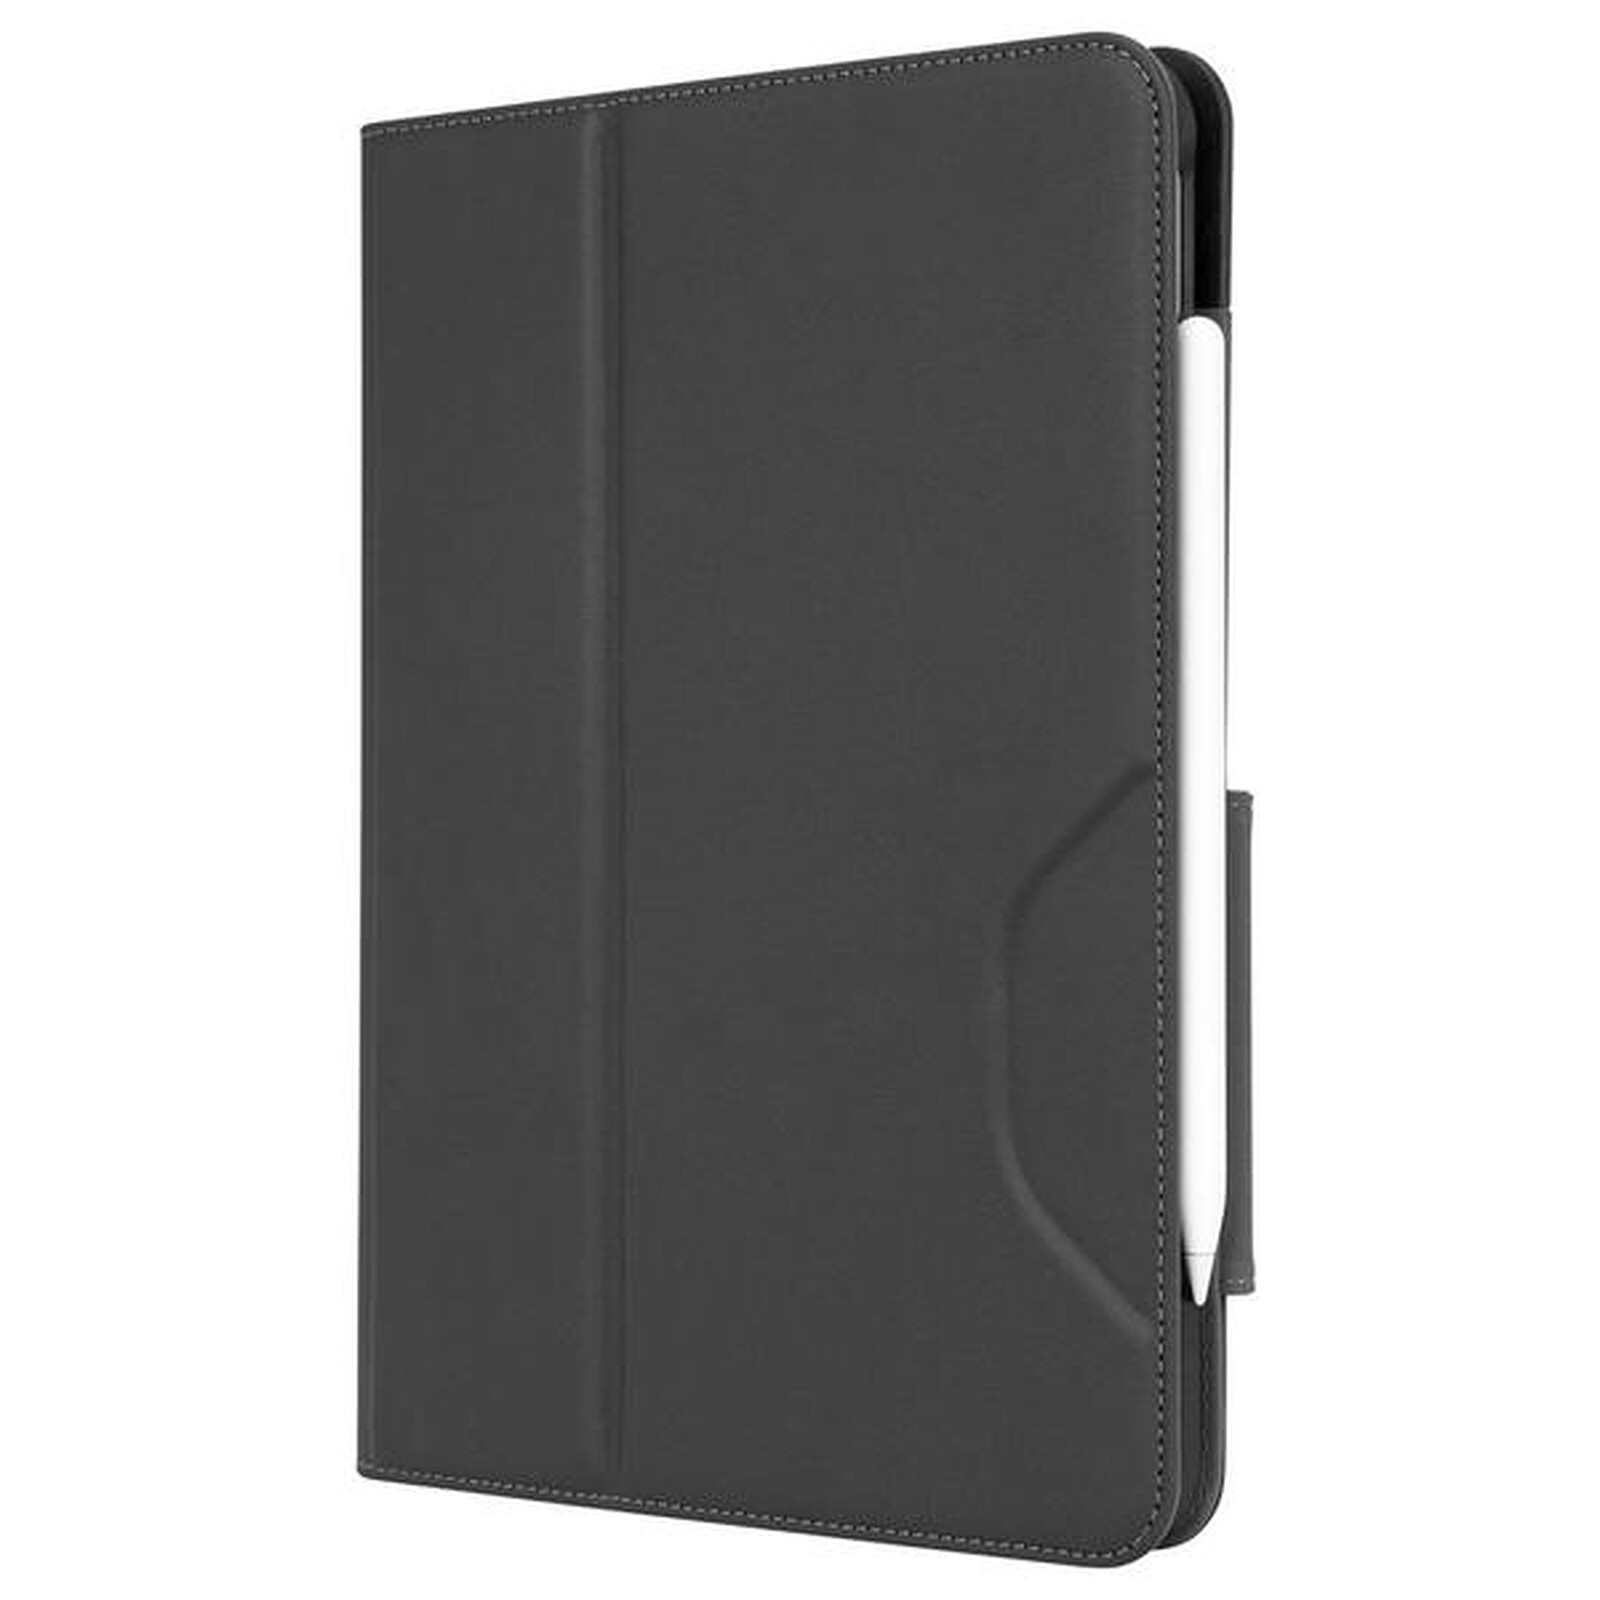 Étui pour iPad 360°, VersaVu Classic Black iPad Case